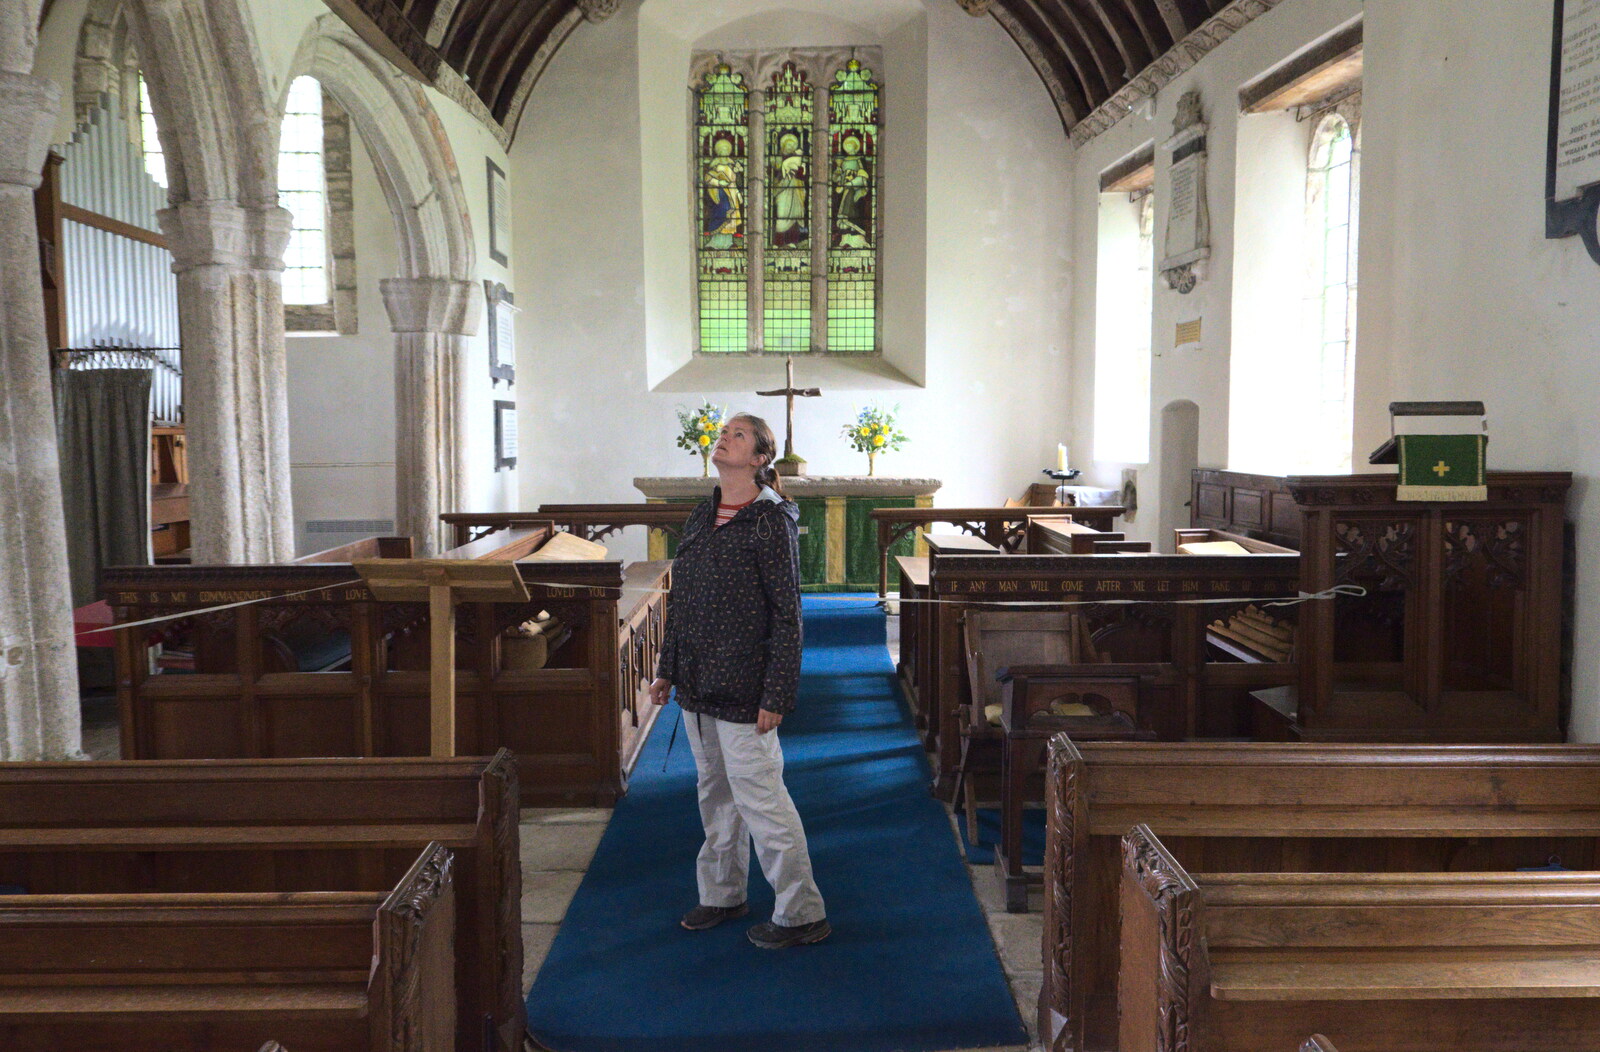 Isobel looks around St. Michael's in Spreyton from A Walk up Hound Tor, Dartmoor, Devon - 24th August 2020